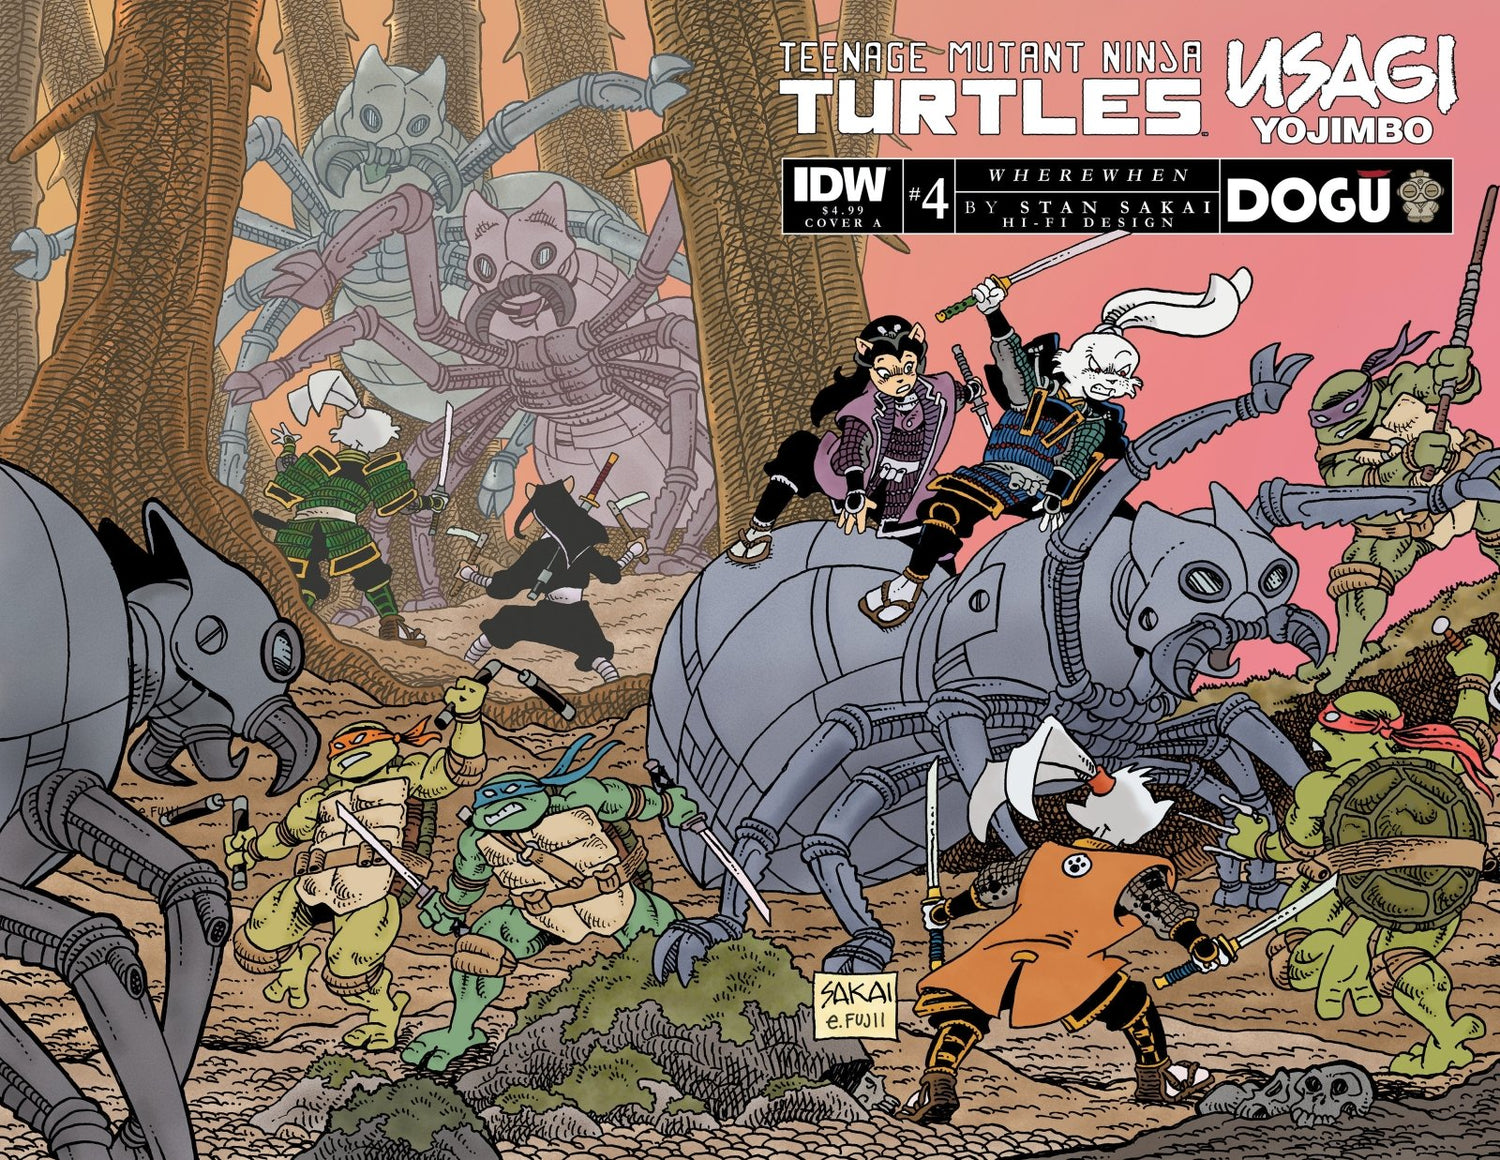 Teenage Mutant Ninja Turtles/Usagi Yojimbo: Wherewhen #4 Cover A (Sakai) - The Fourth Place